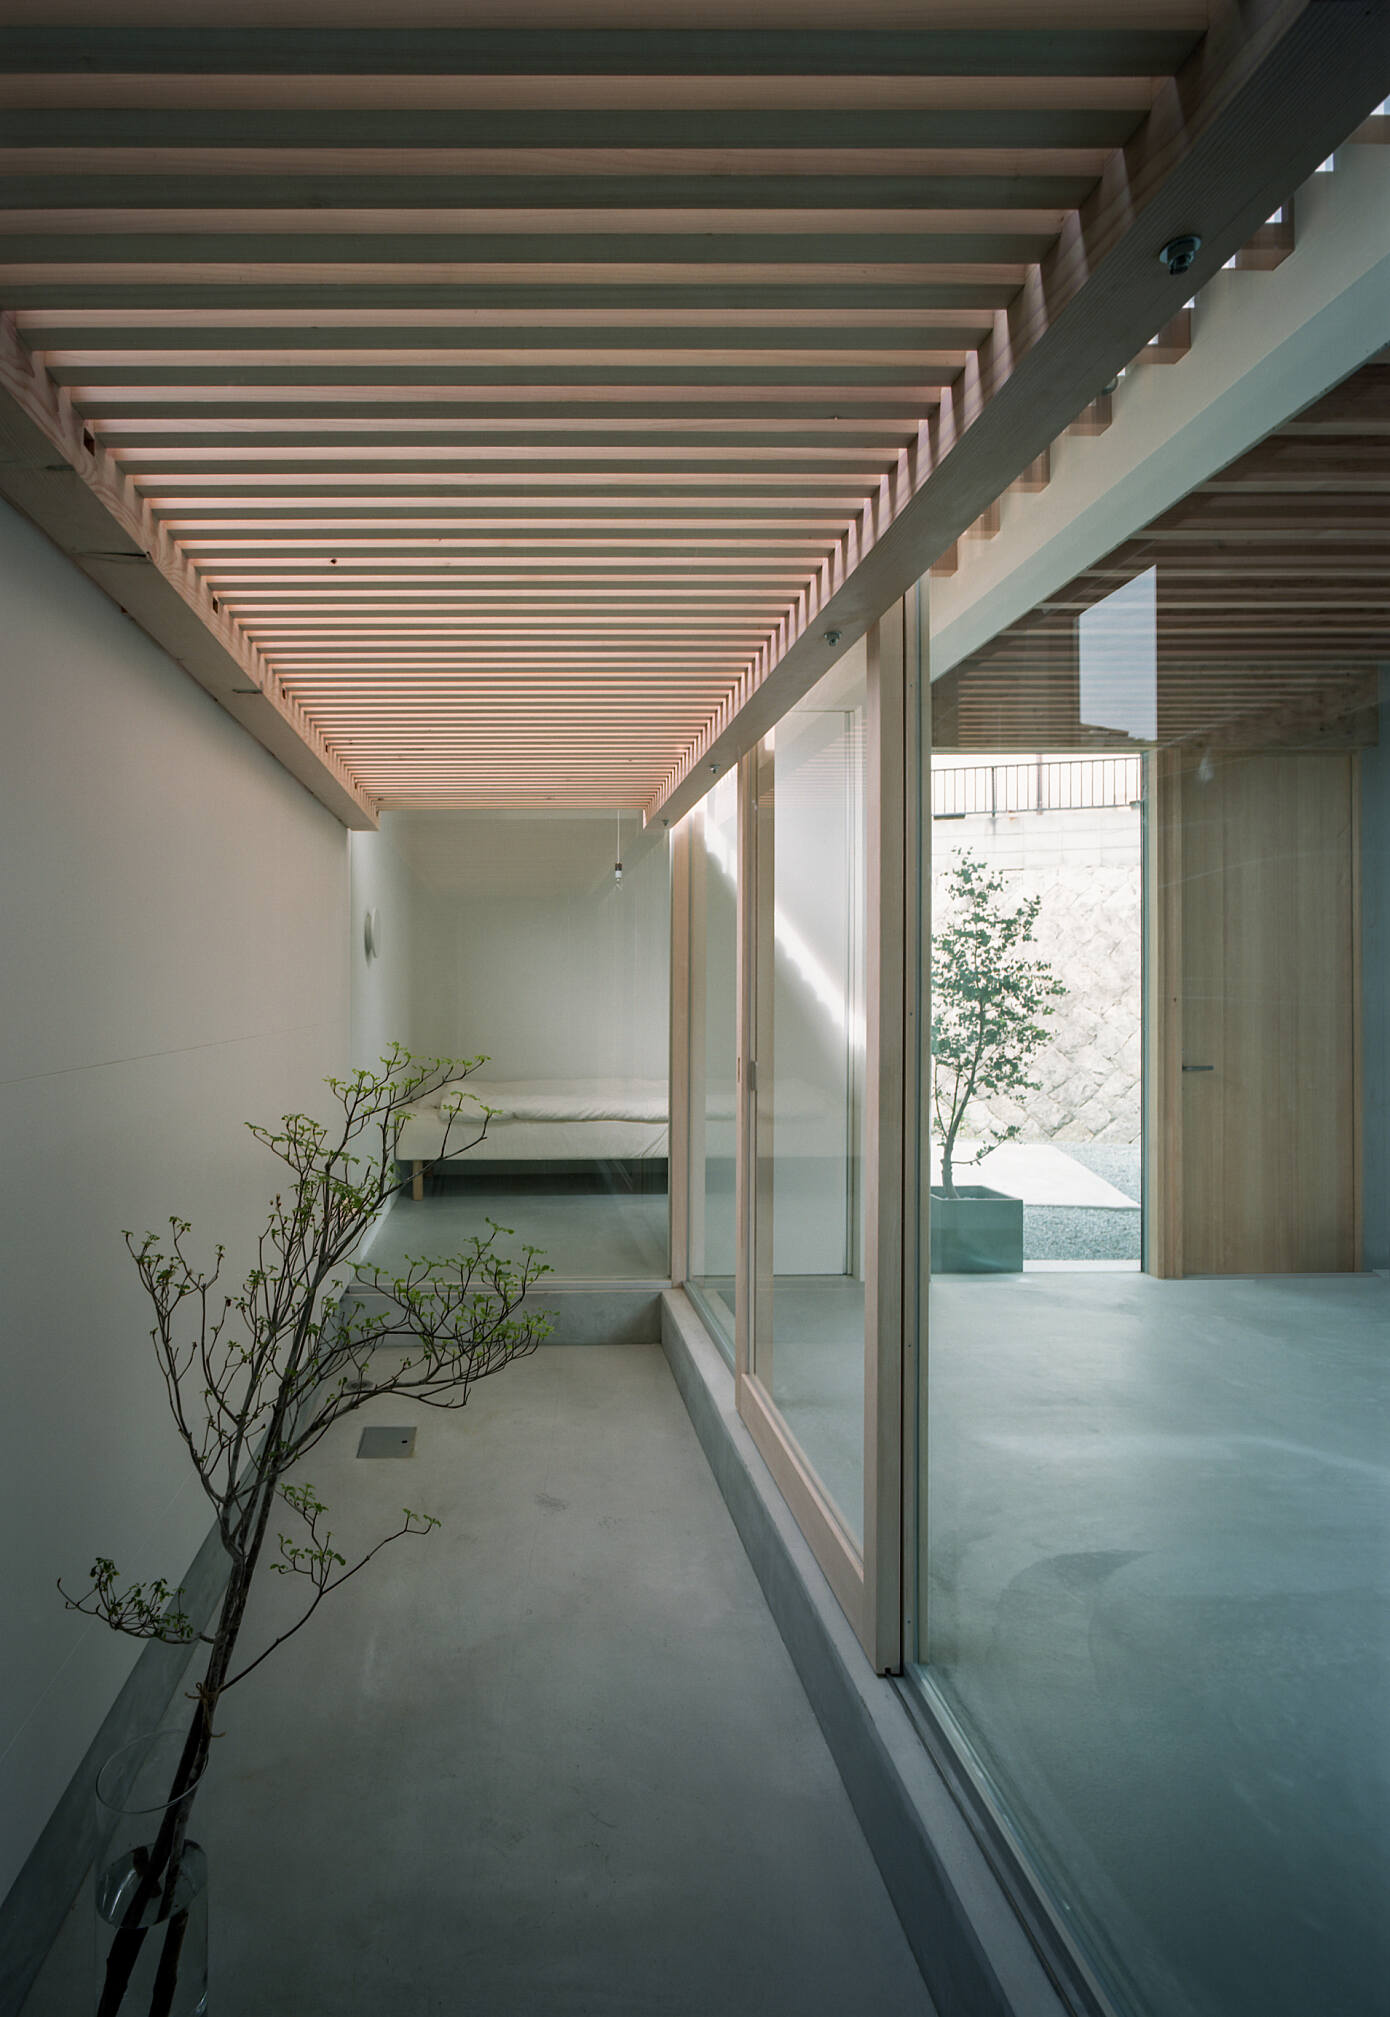 House in Himeji by Fujiwaramuro Architects